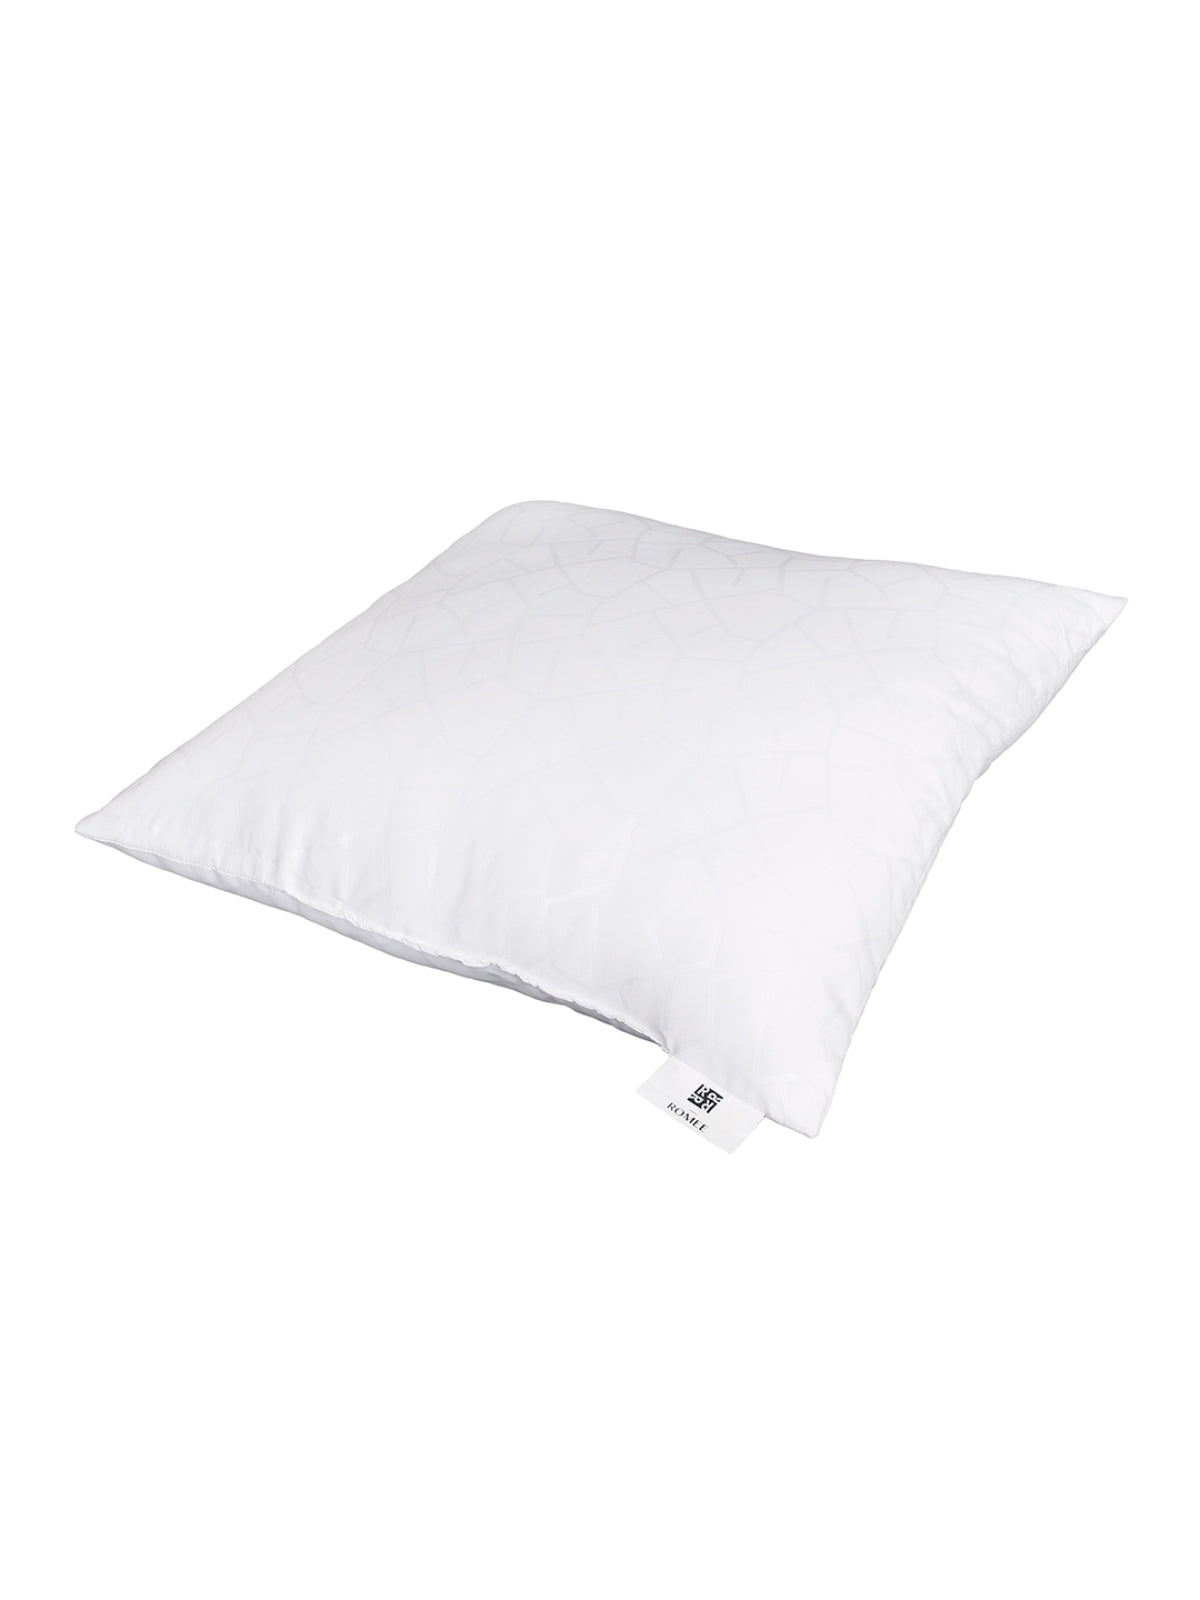 White Set of 5 Plain Cushion Fillers, 40 cm x 40 cm